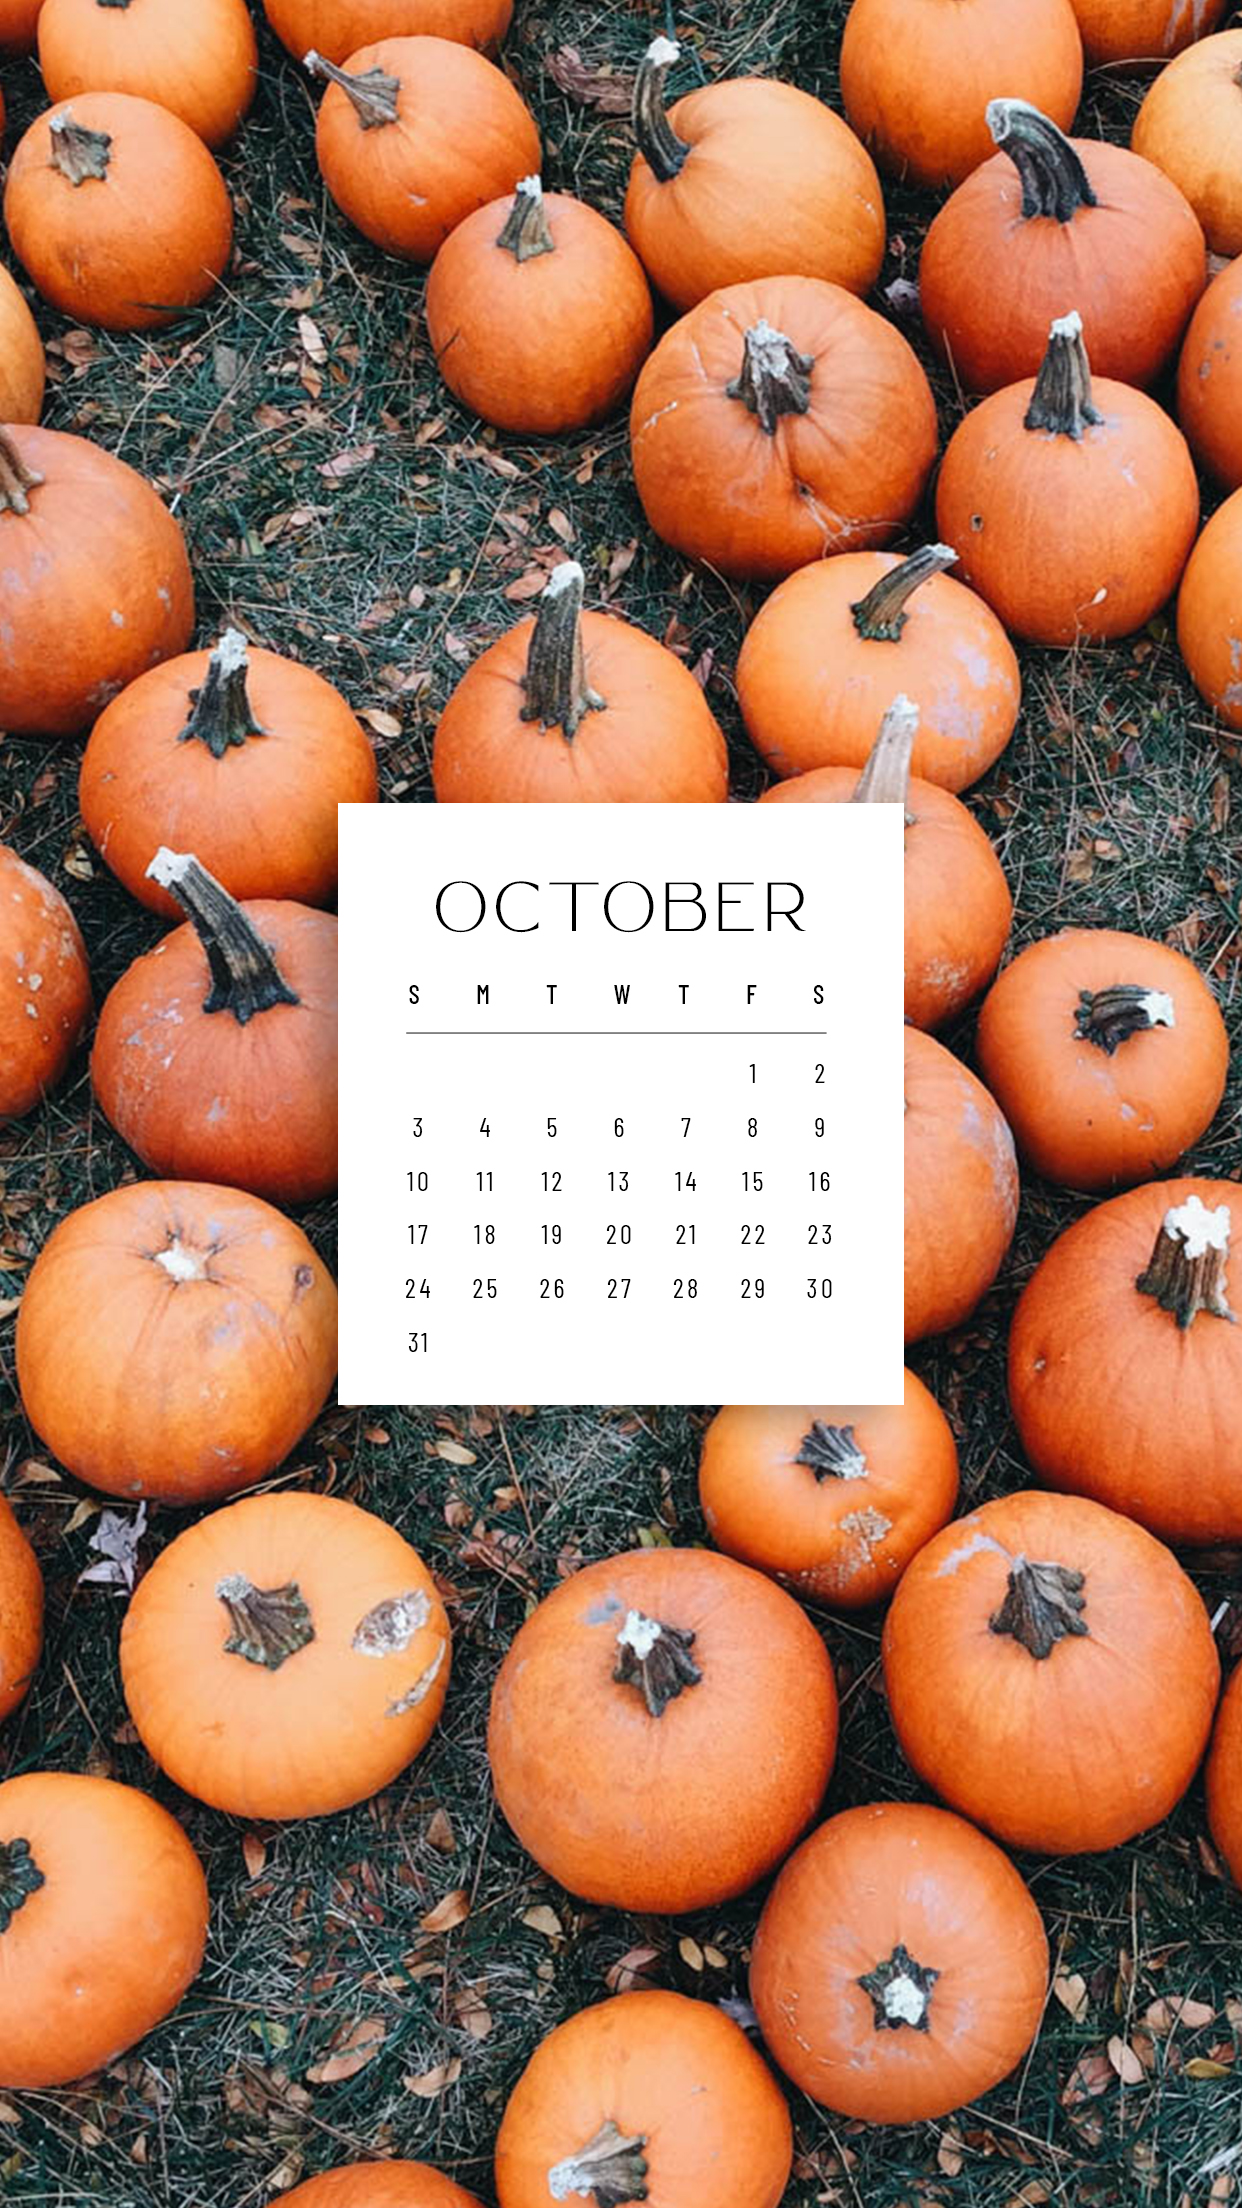 October 2021 Mobile Calendar Wallpaper